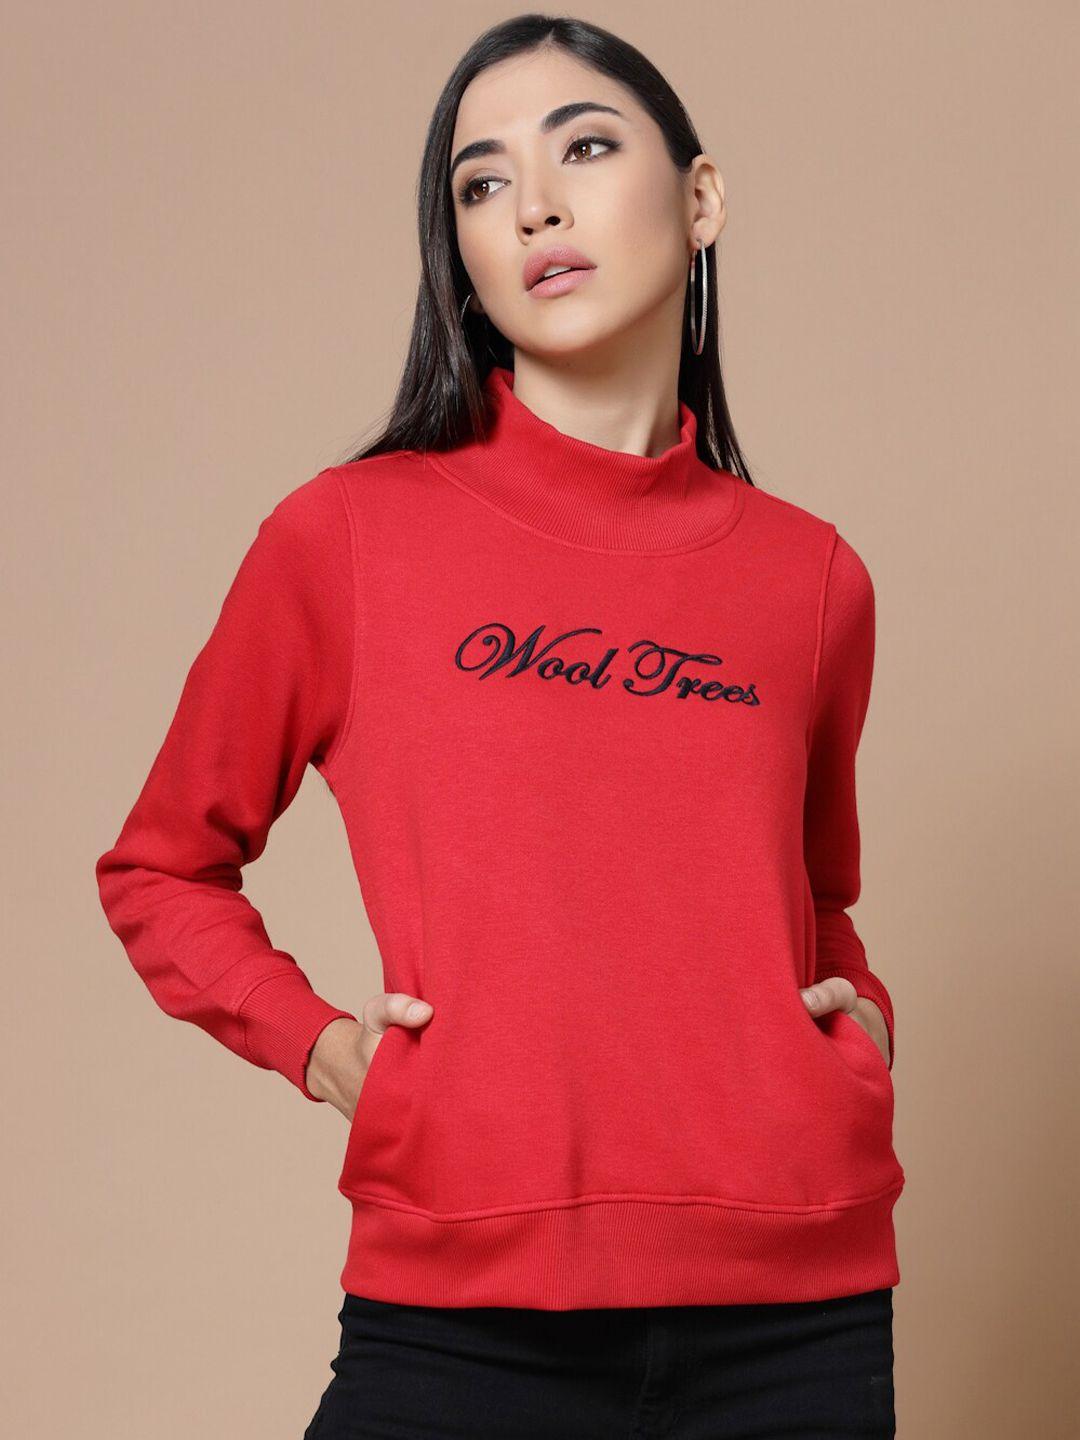 wool trees women red printed cotton sweatshirt